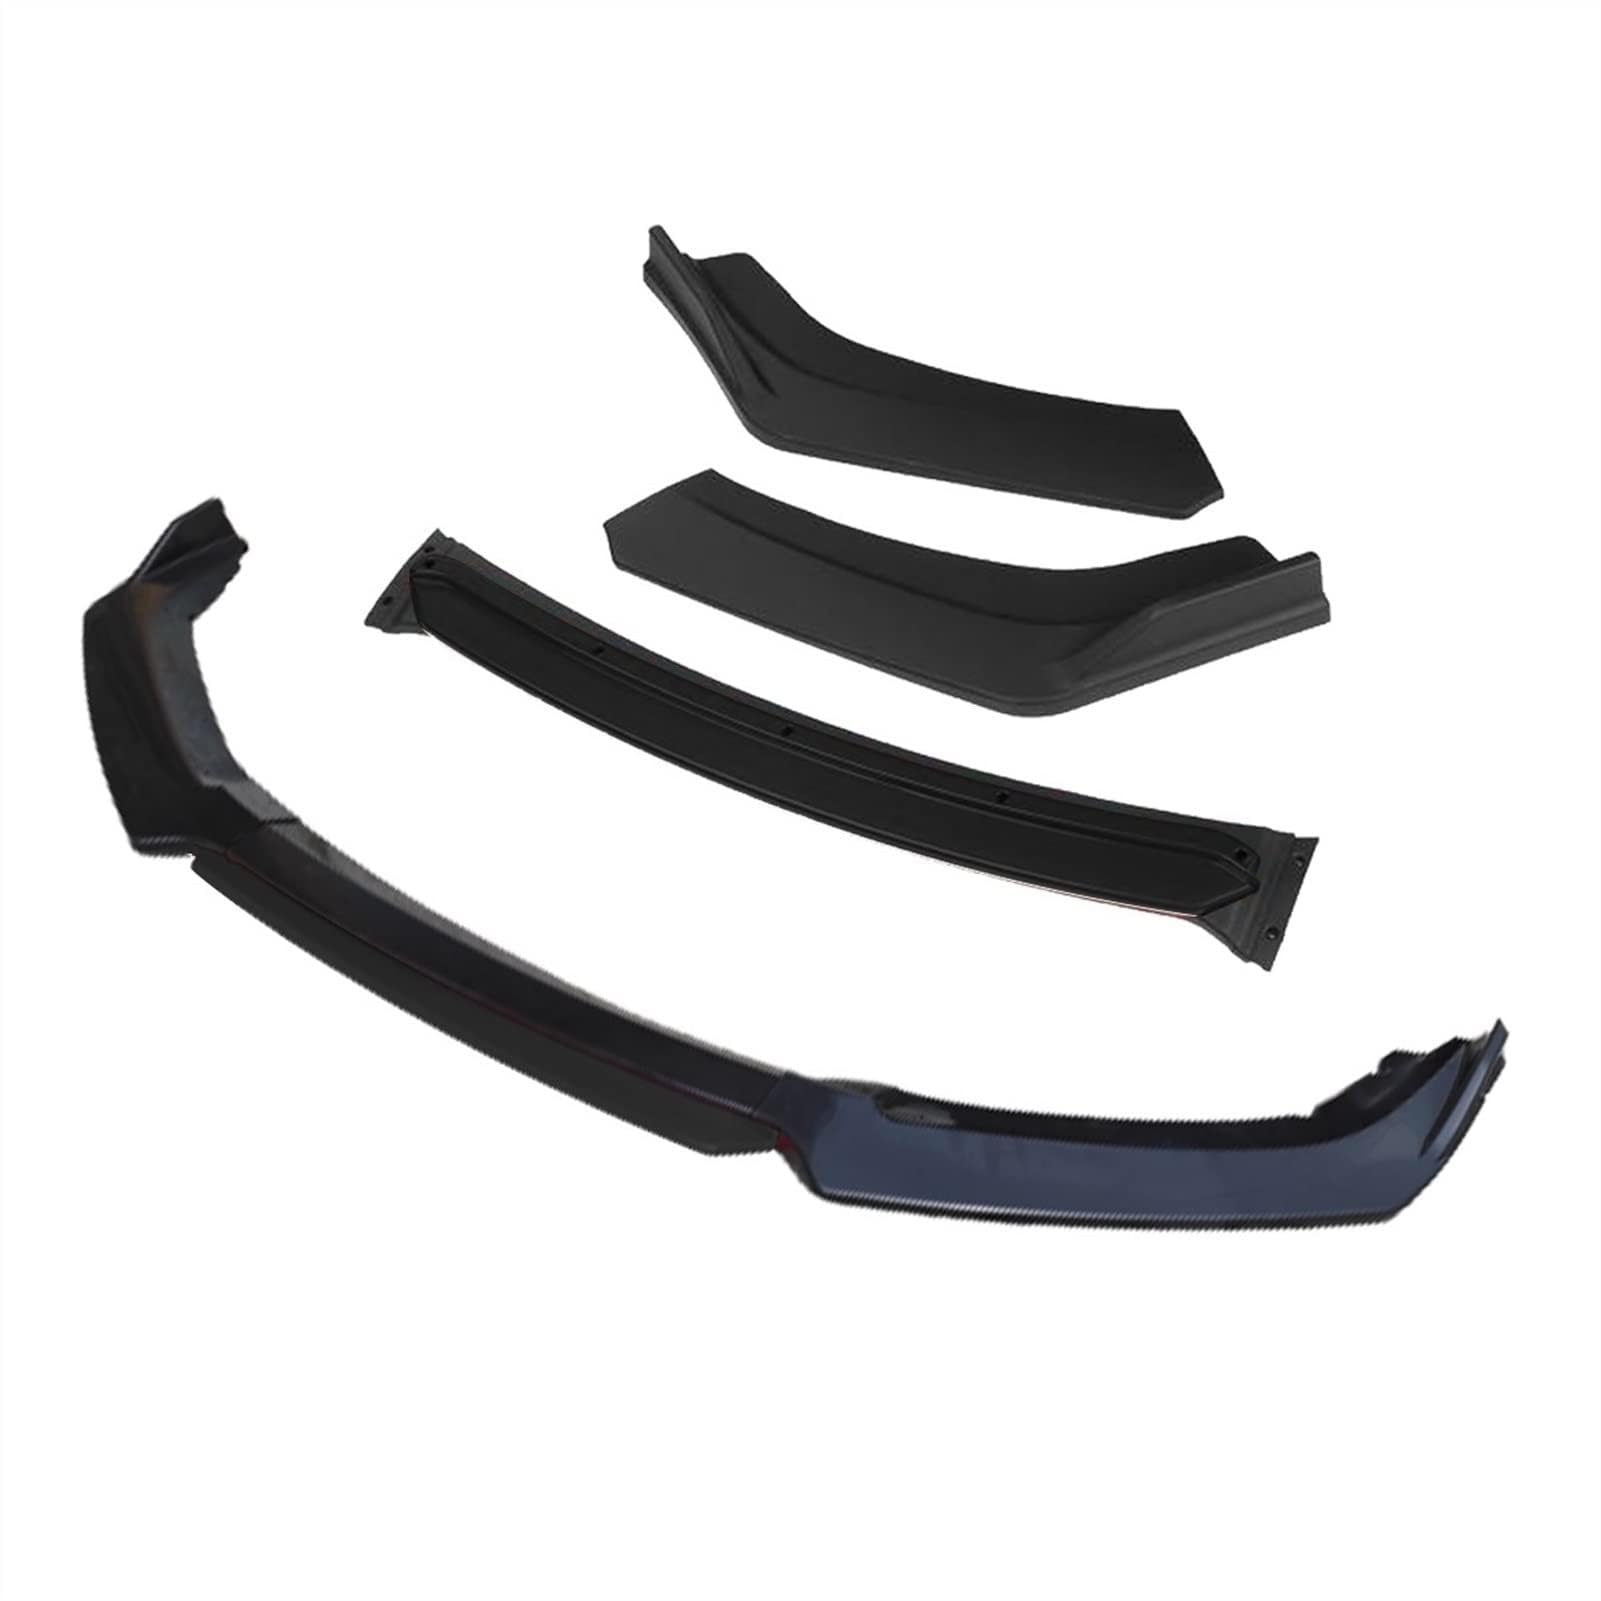 Auto Frontlippe Frontspoiler für FIAT Tipo Egea 2015-2020, Frontstoßstange Splitter Lip Diffusor Frontspoiler Protector Kits,A/4pcs+Black von LCGAF